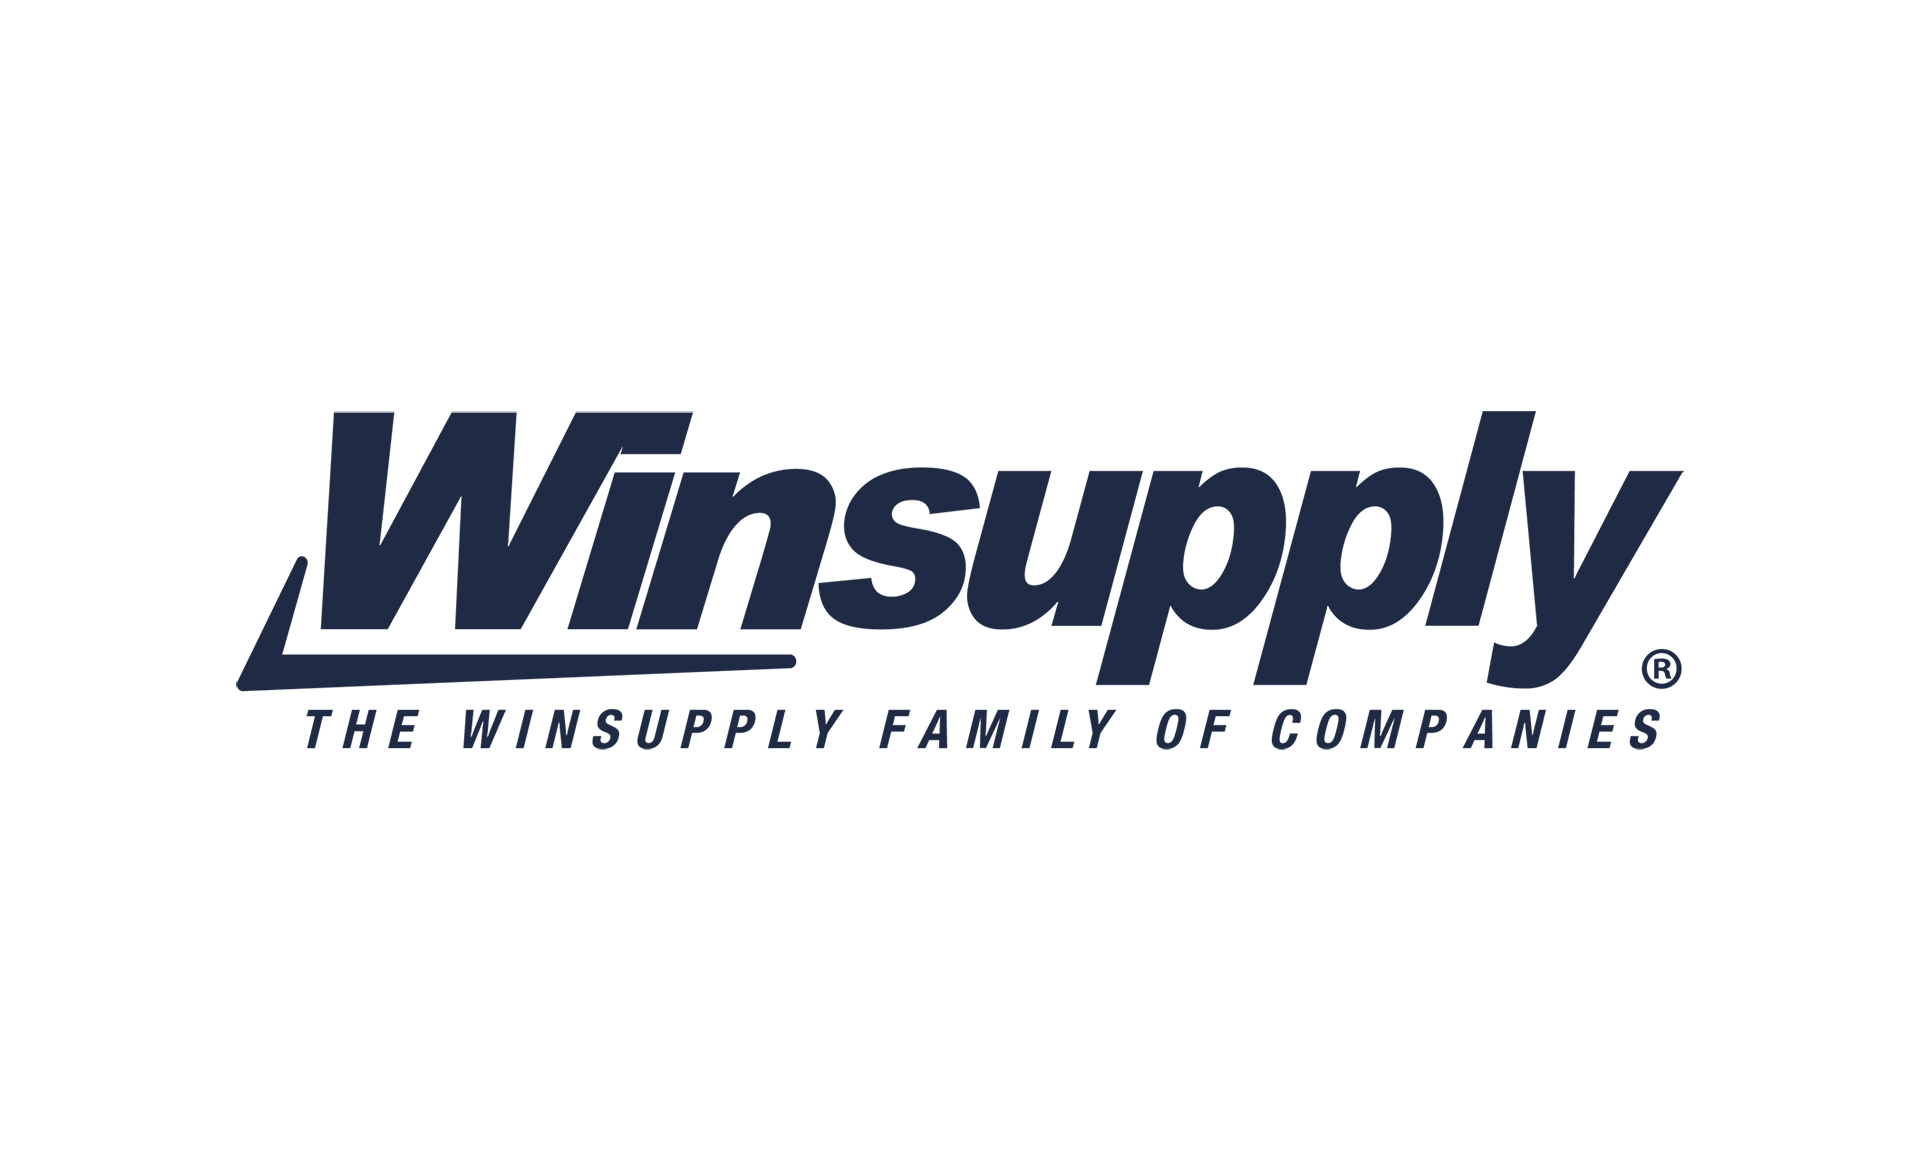 Winsupply